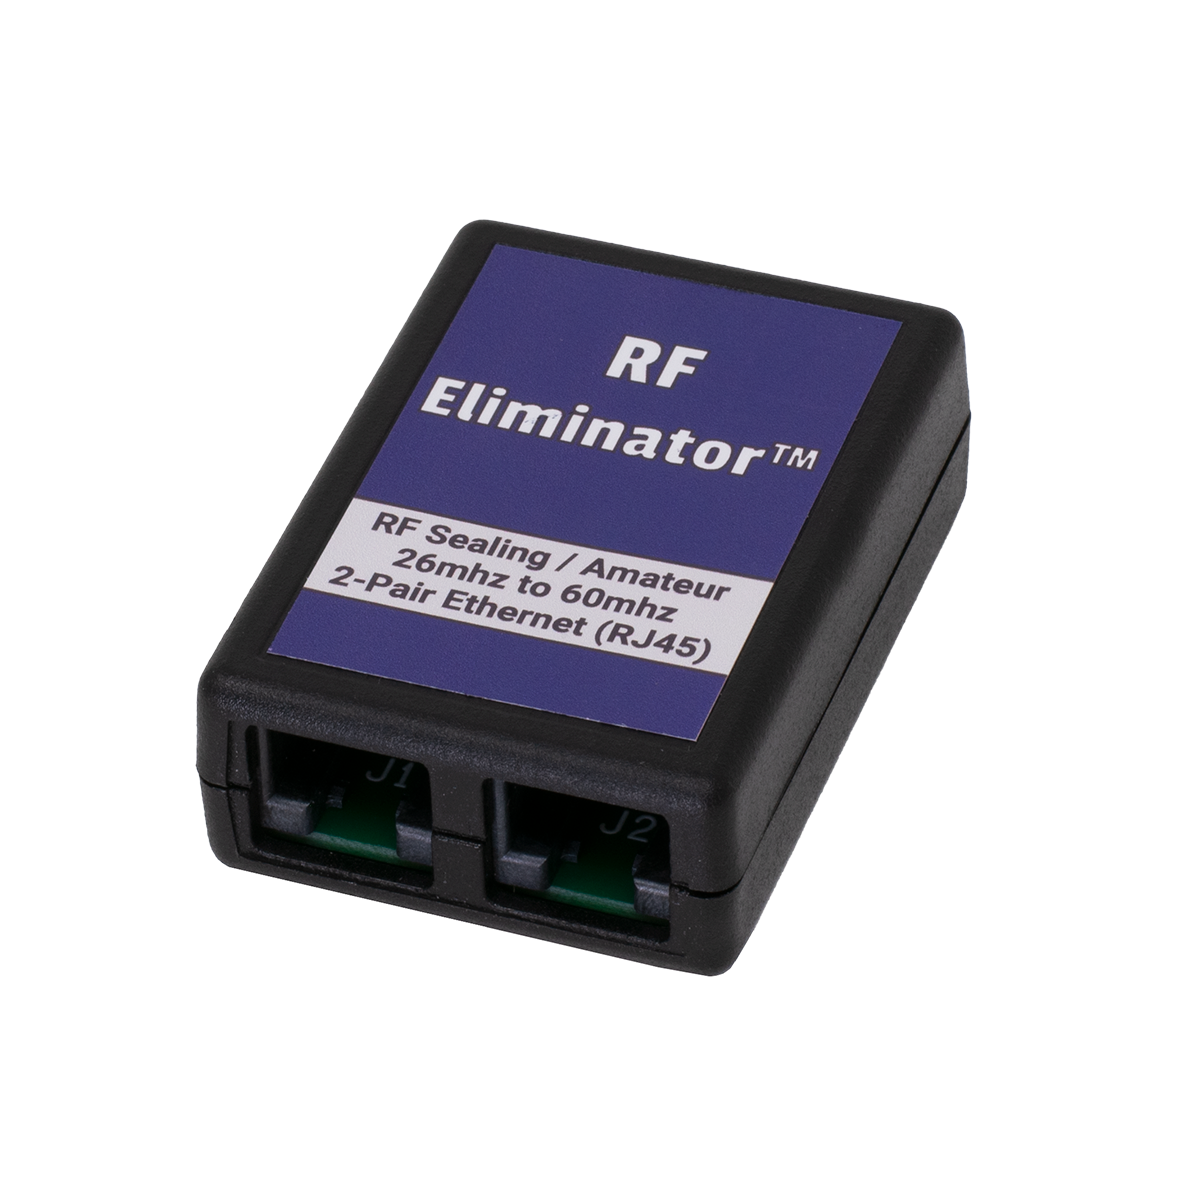 RF Eliminator - 2 Pair Ethernet - Sealing (Side View)